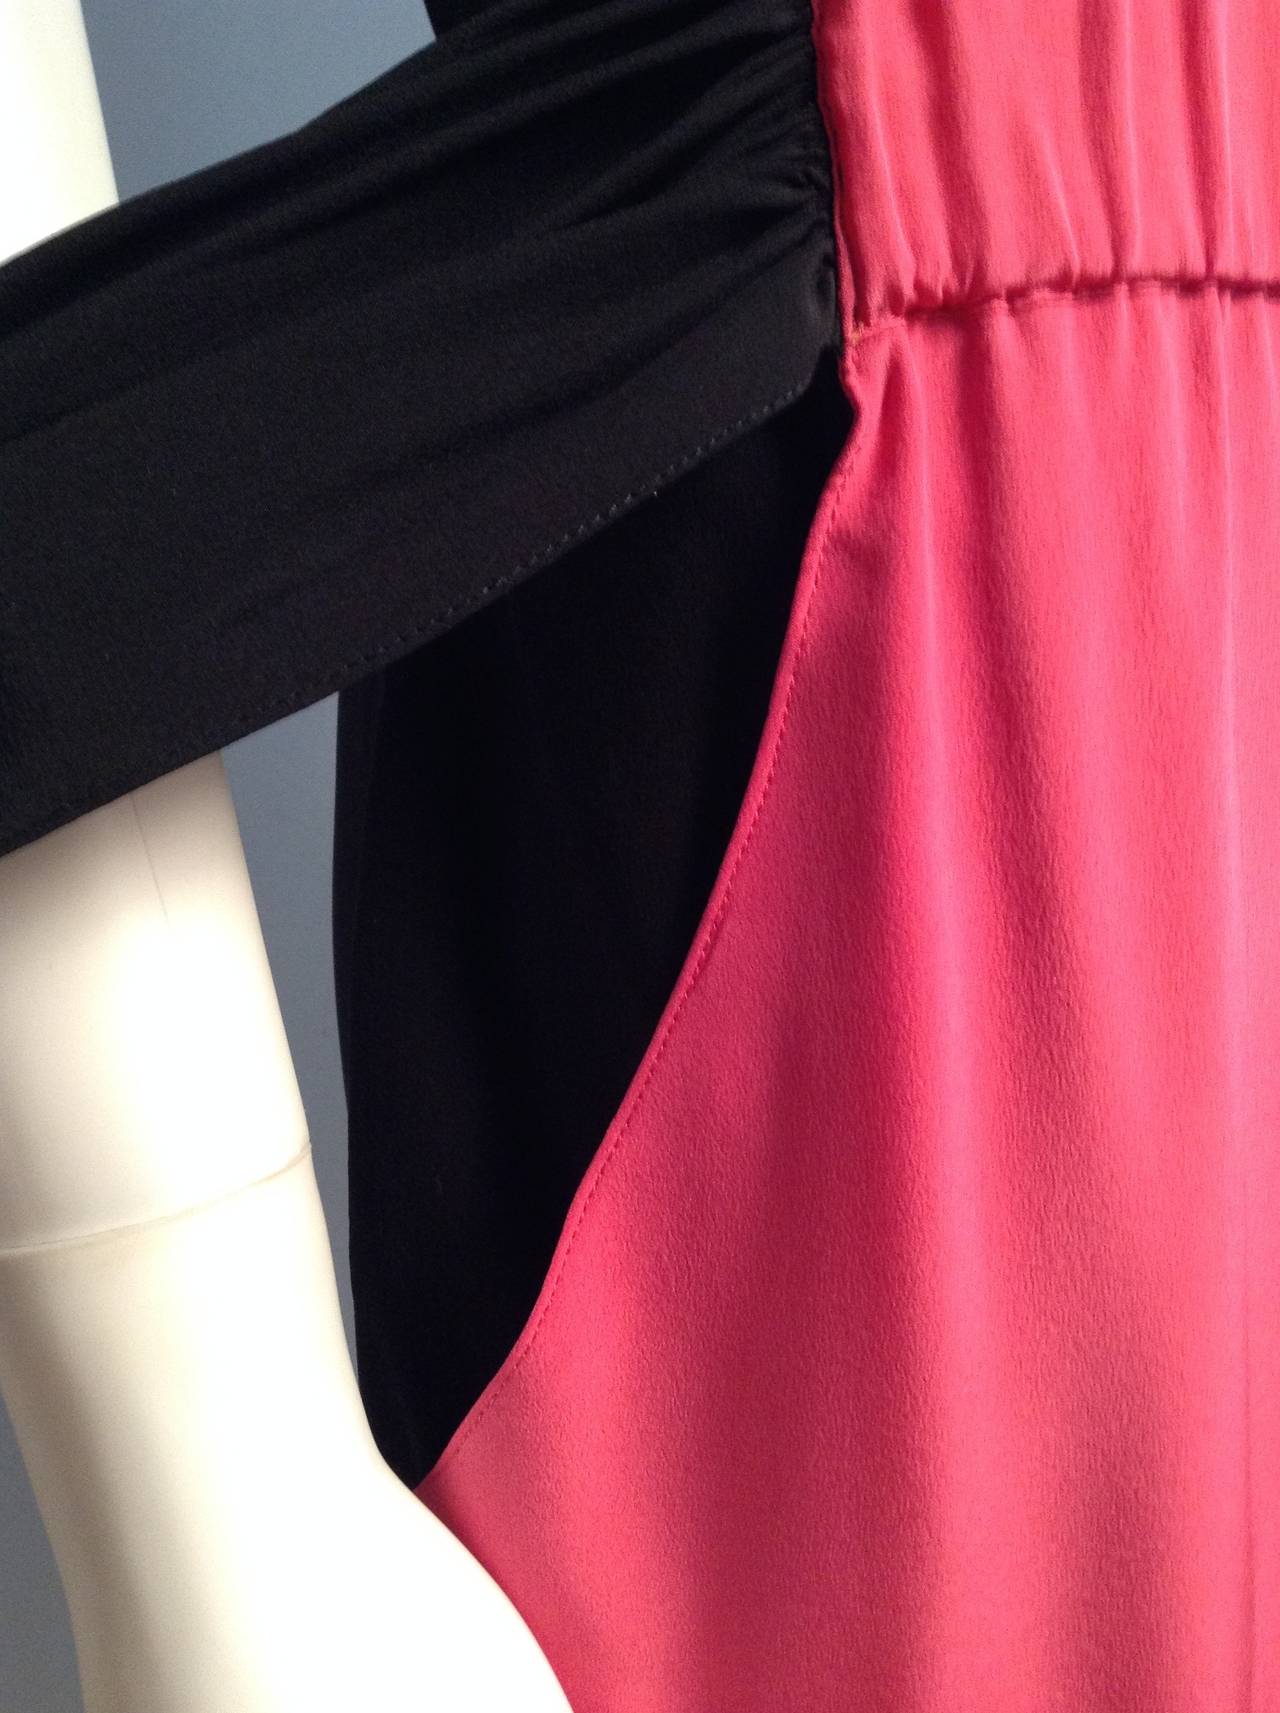 Karl Lagerfeld Black and Pink Vintage Dress Size 8 For Sale 6